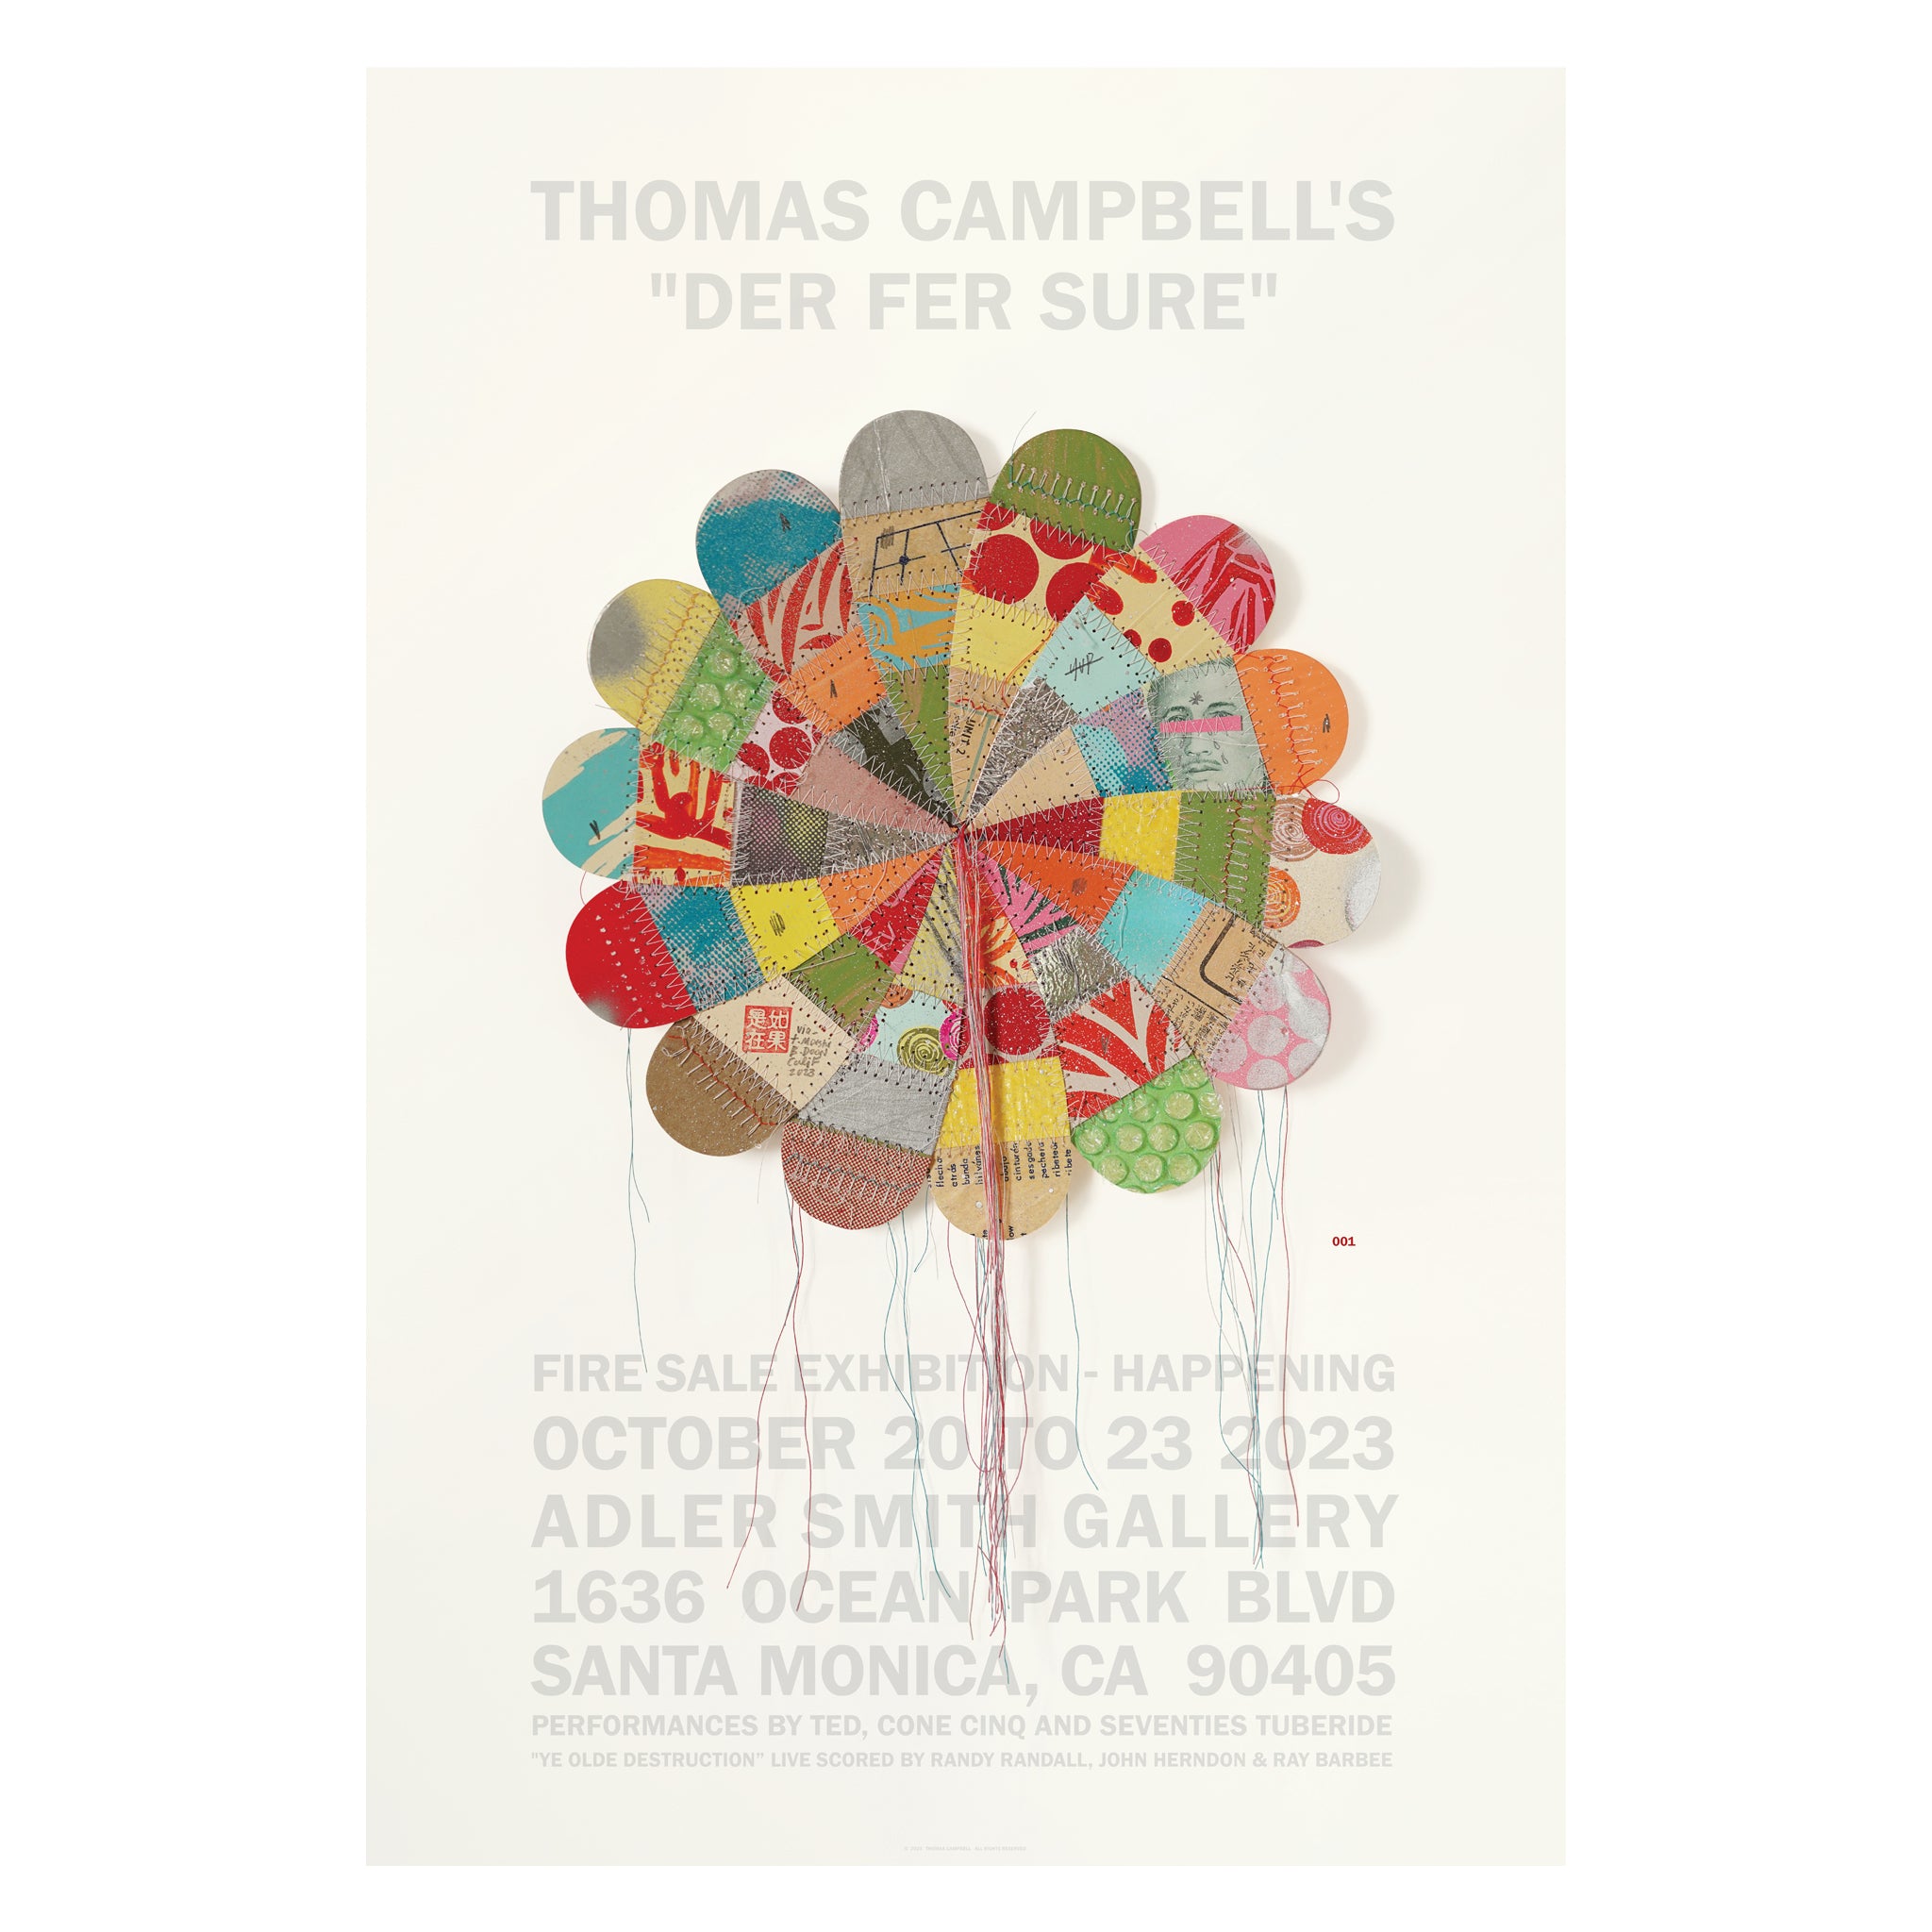 Thomas Campbell – Der Fer Sure 2023 Exhibition/Happening